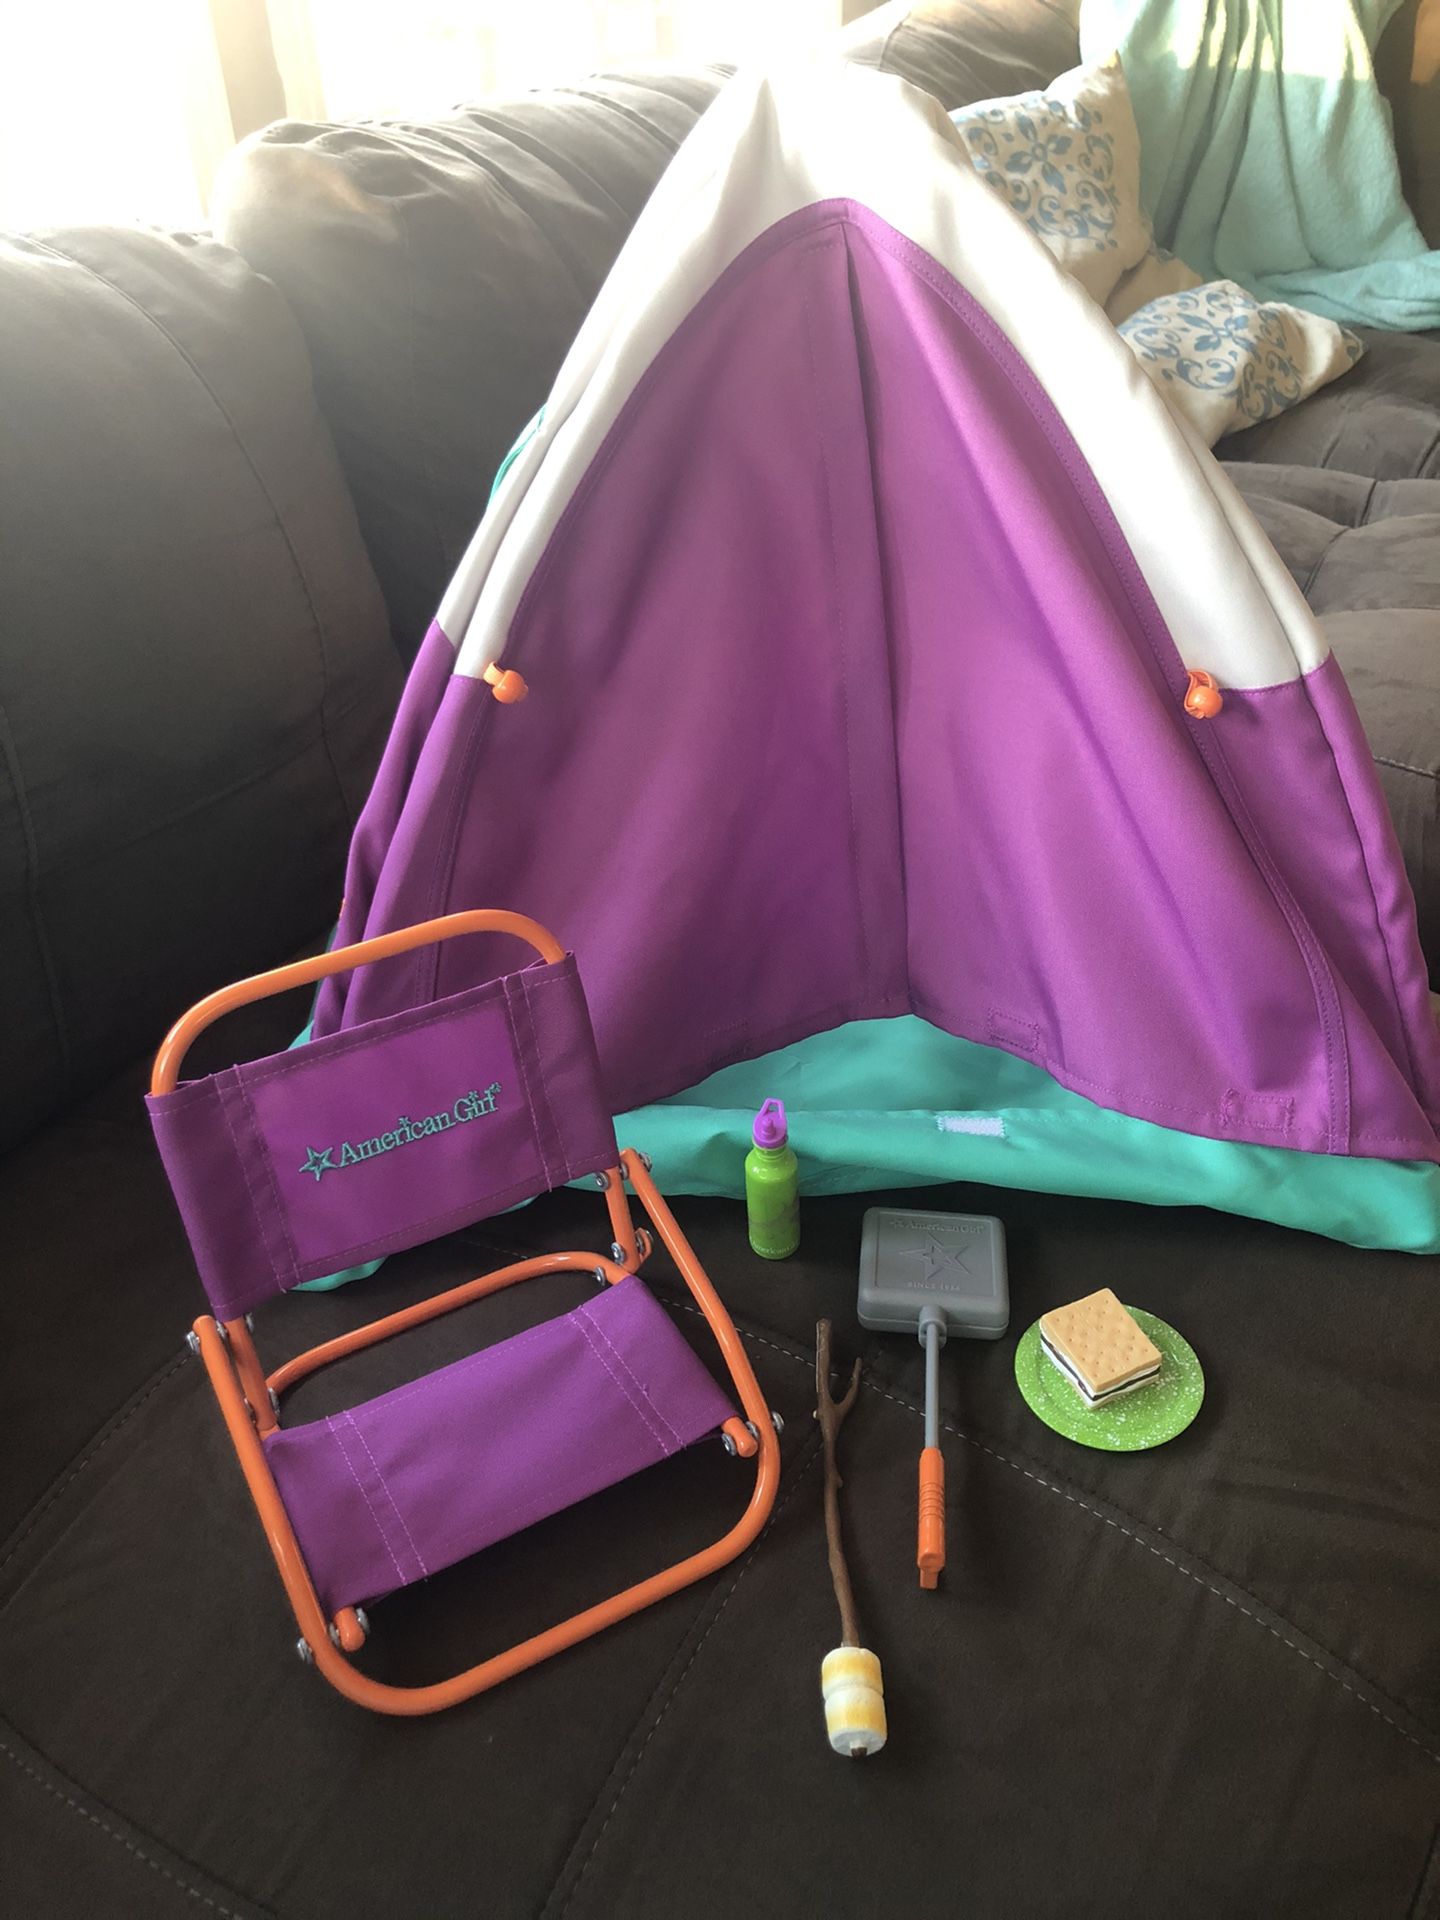 American girl doll camping set